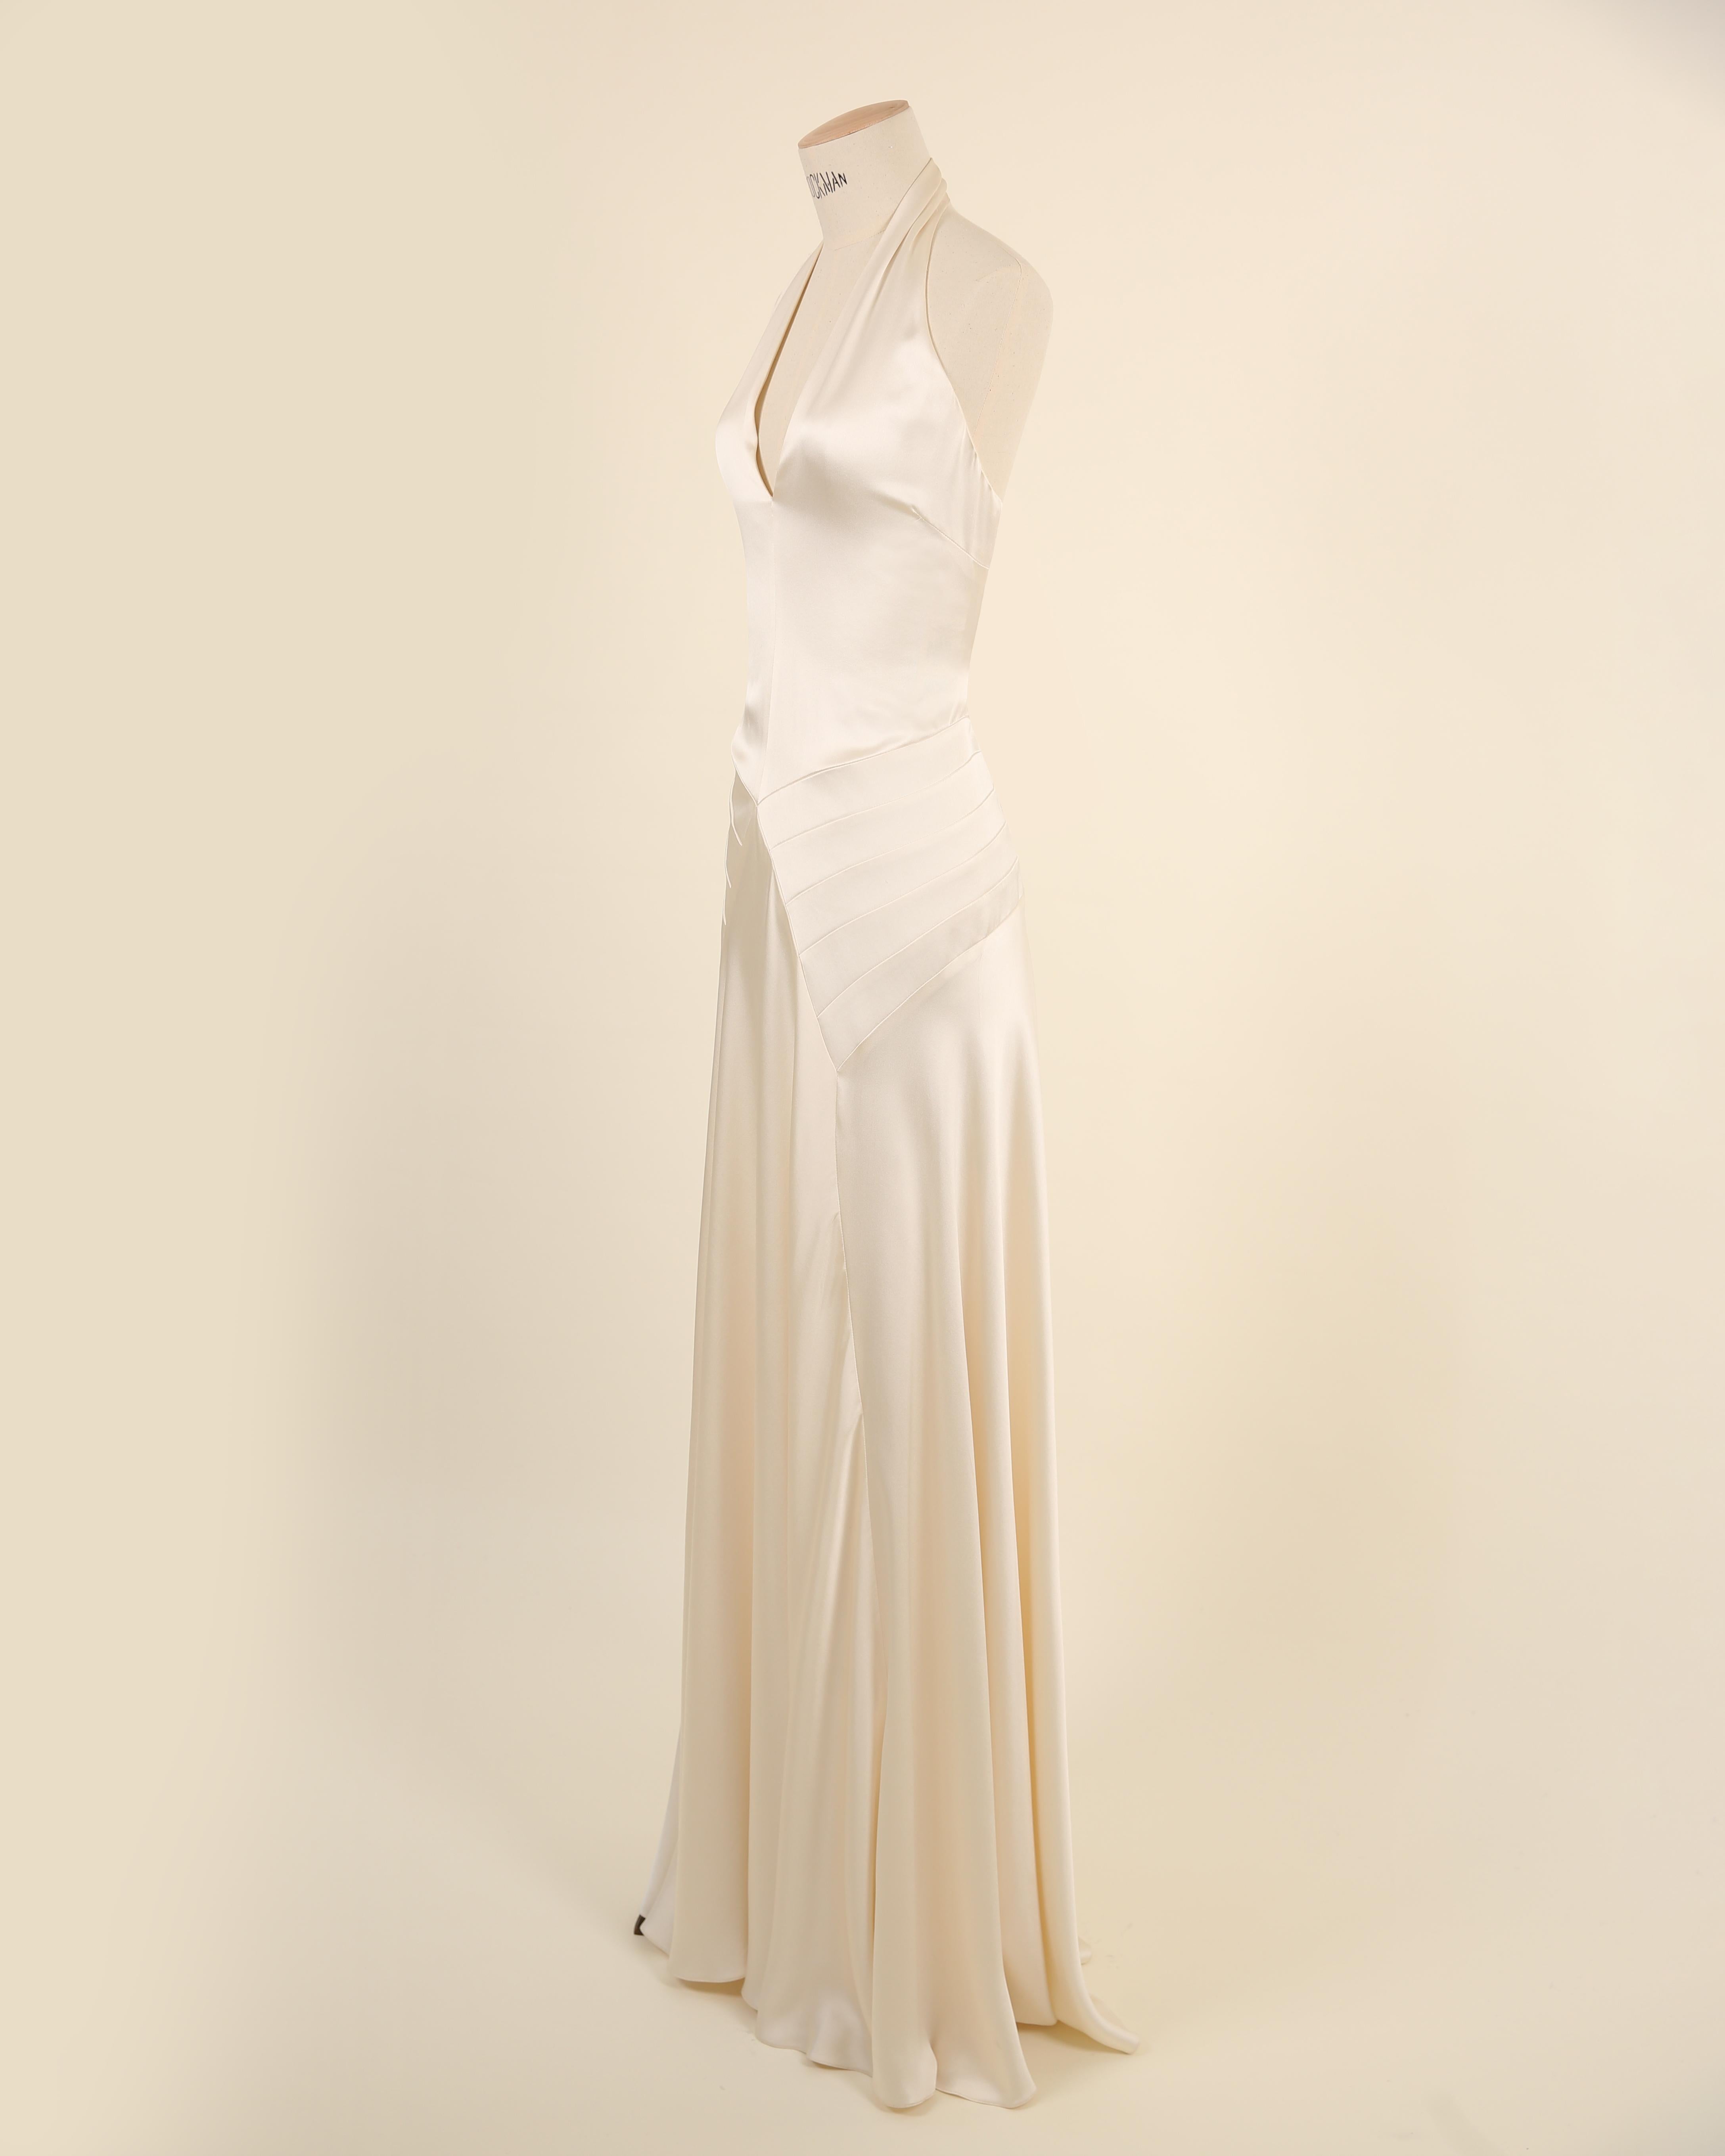 Ralph Lauren S/S 2009 white ivory silk plunging halter neck wedding gown dress For Sale 2